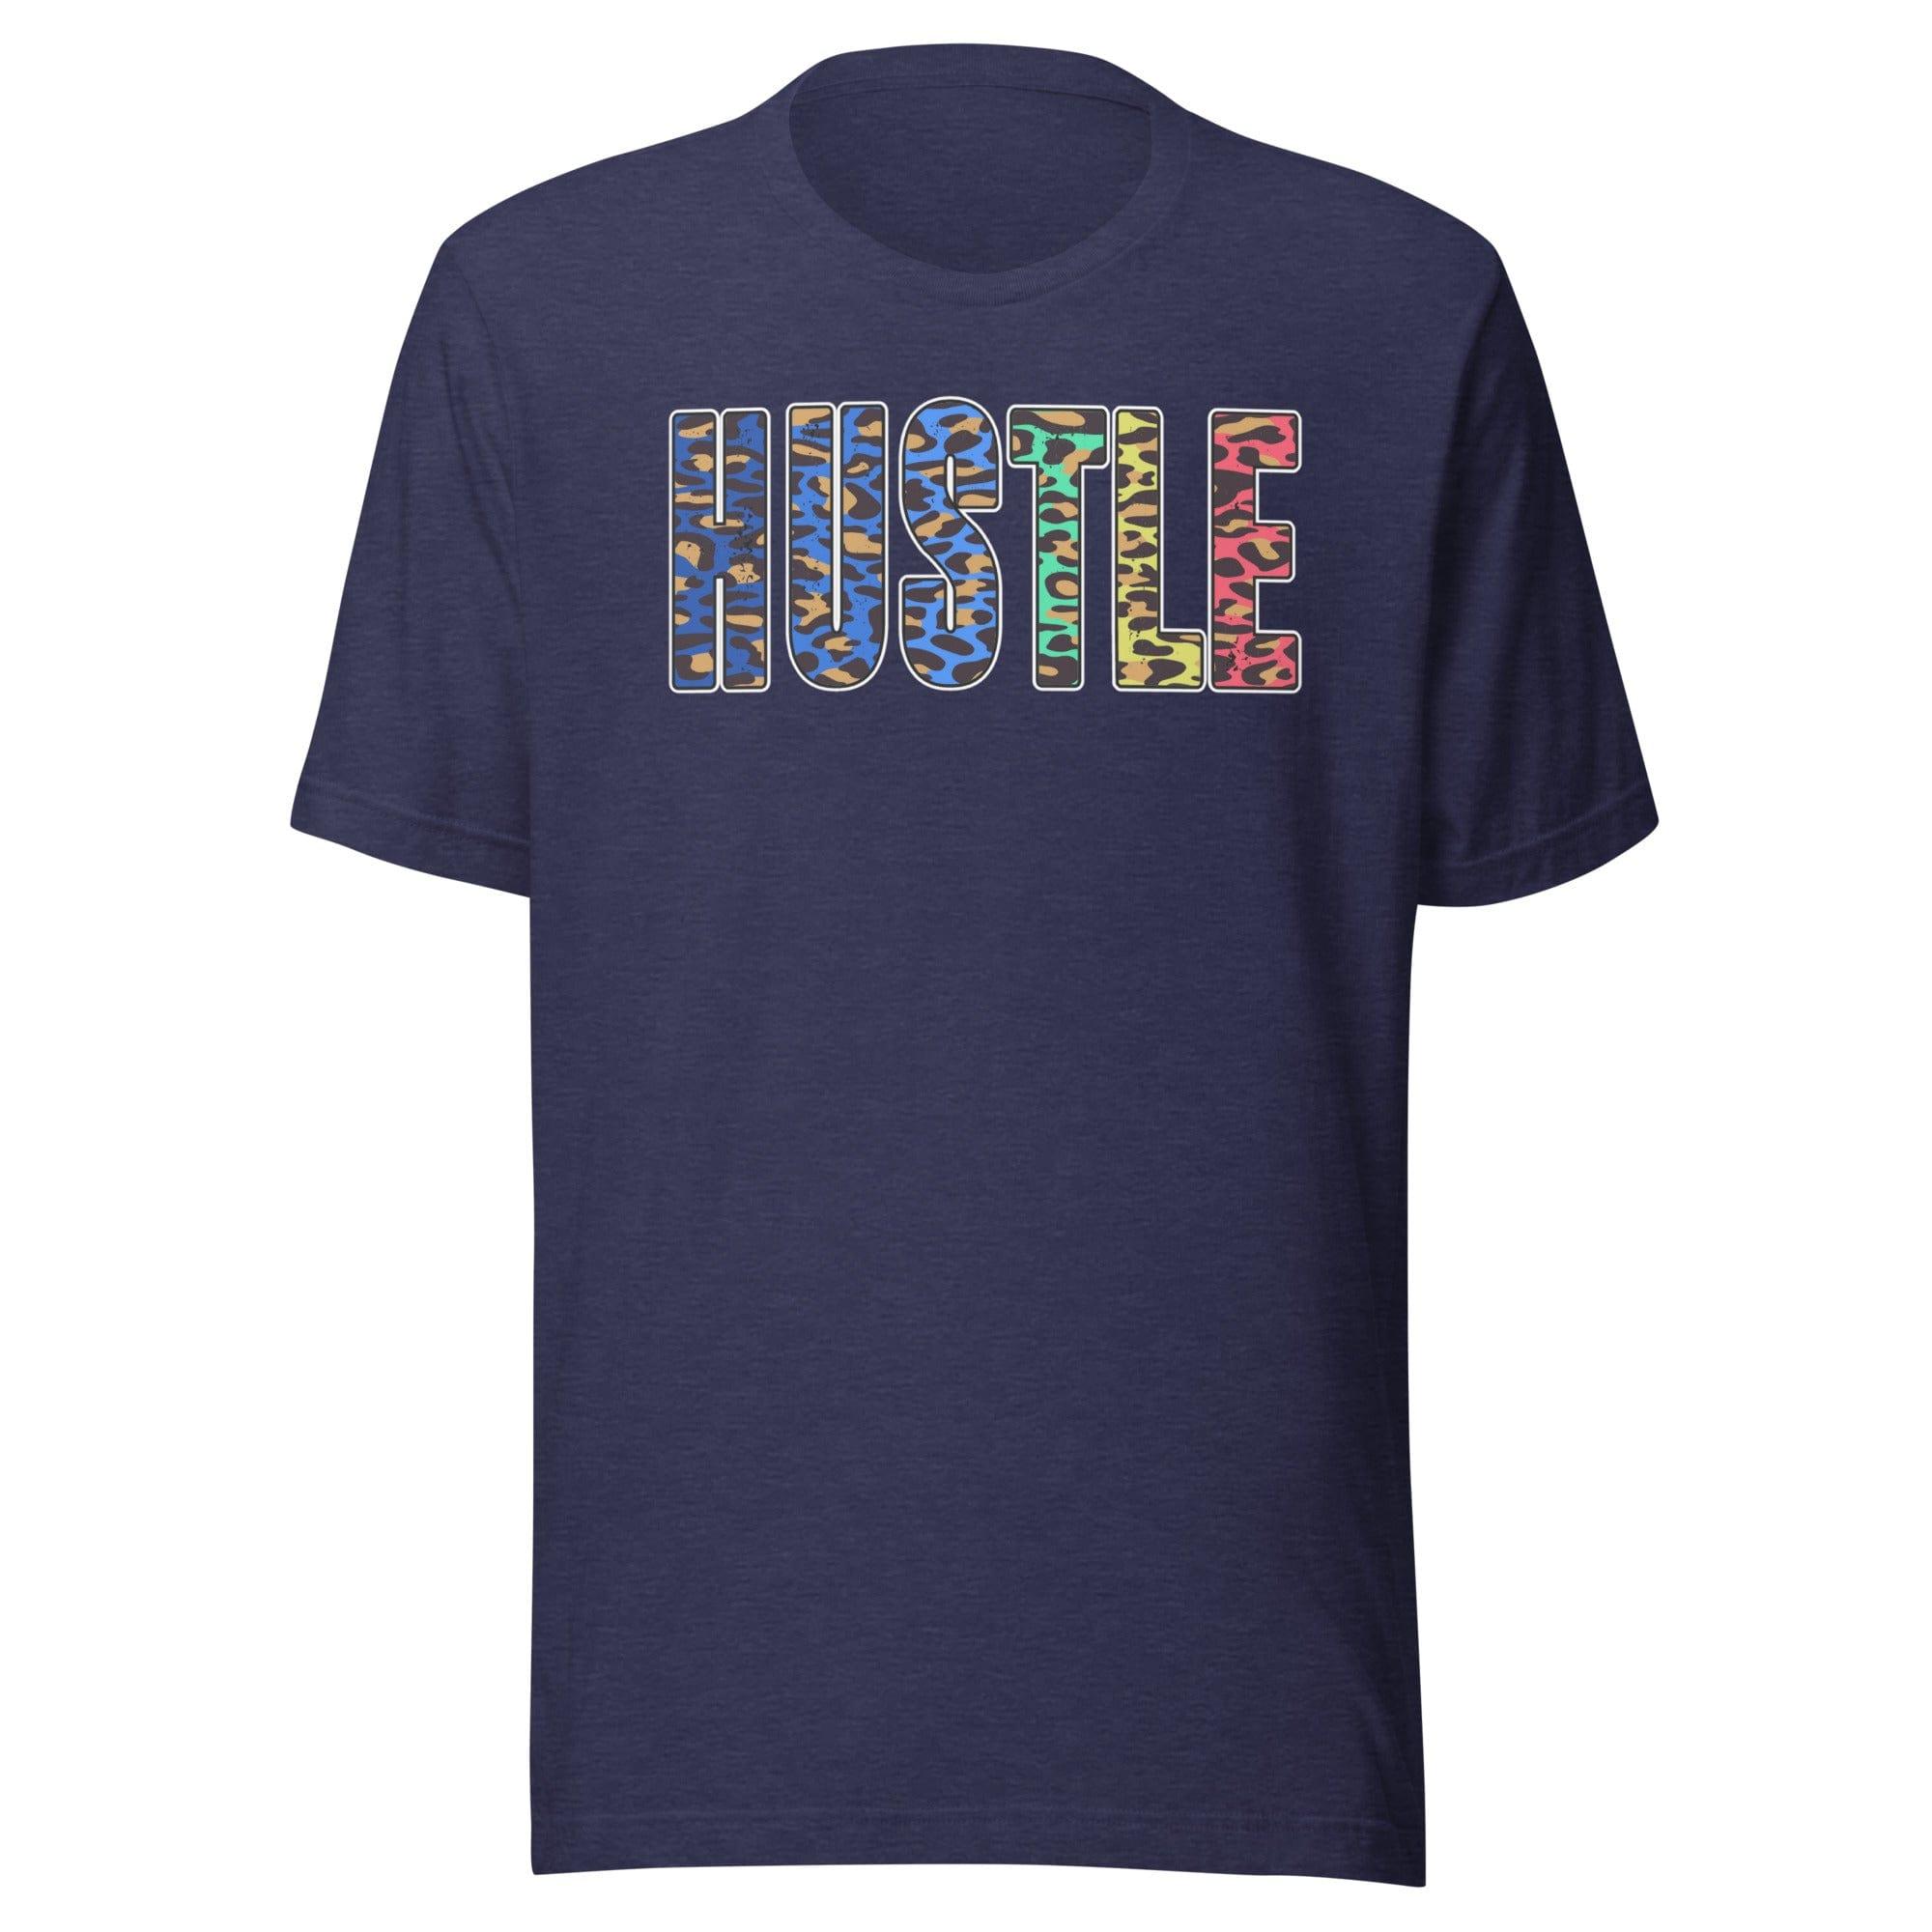 Urban T-shirt Urban Hustle Series in Leopard Print Short Sleeve Unisex Top - TopKoalaTee